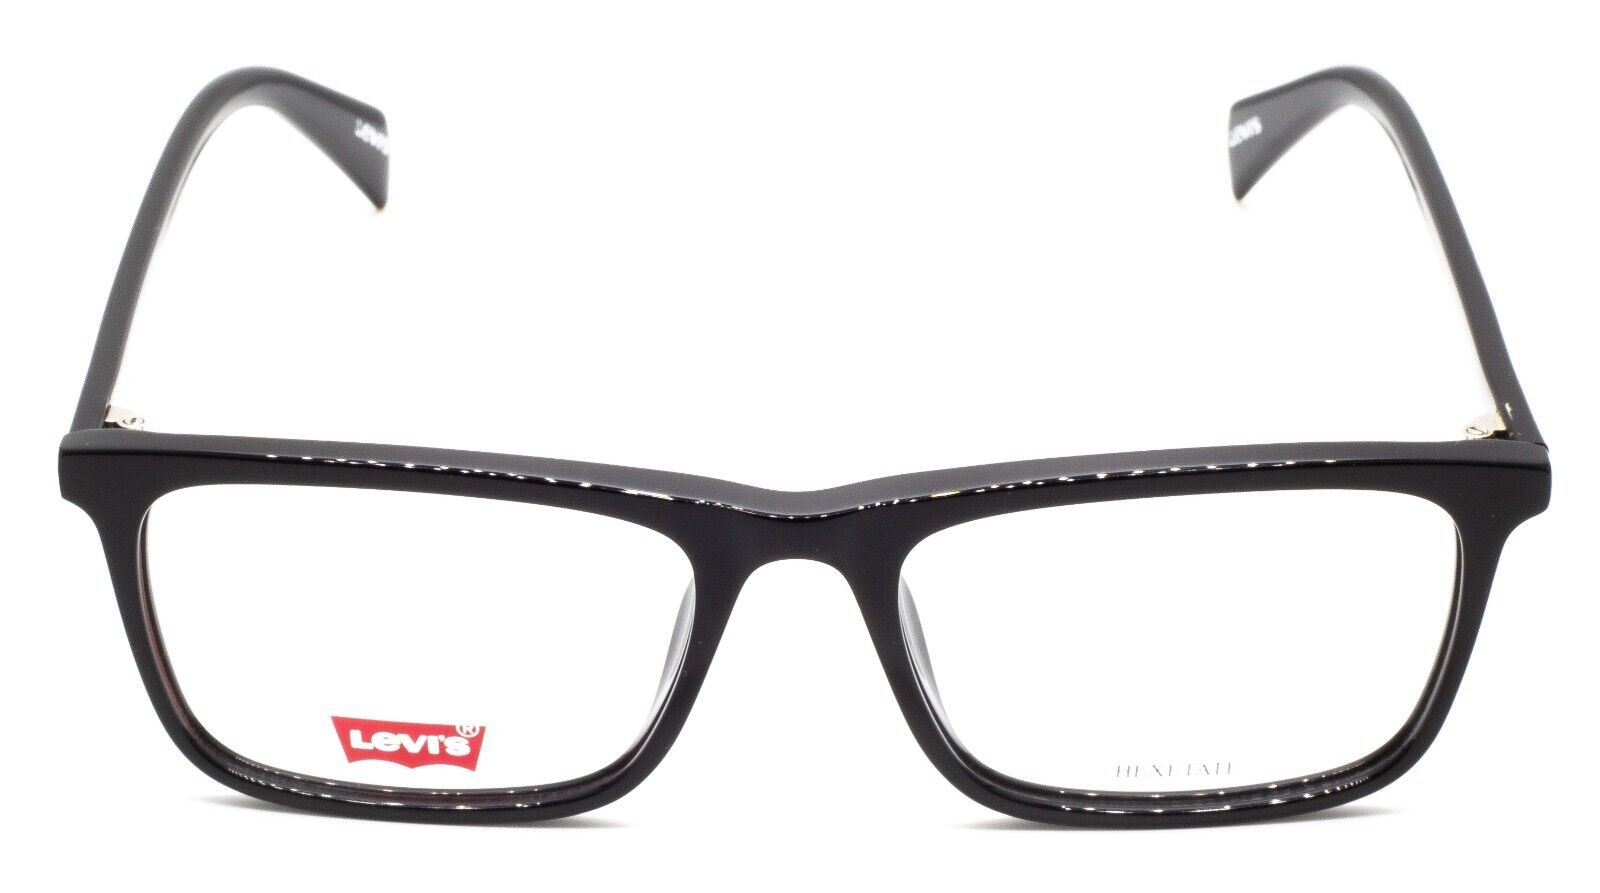  Levi's LV 1007 Oval Prescription Eyeglass Frames, Gold